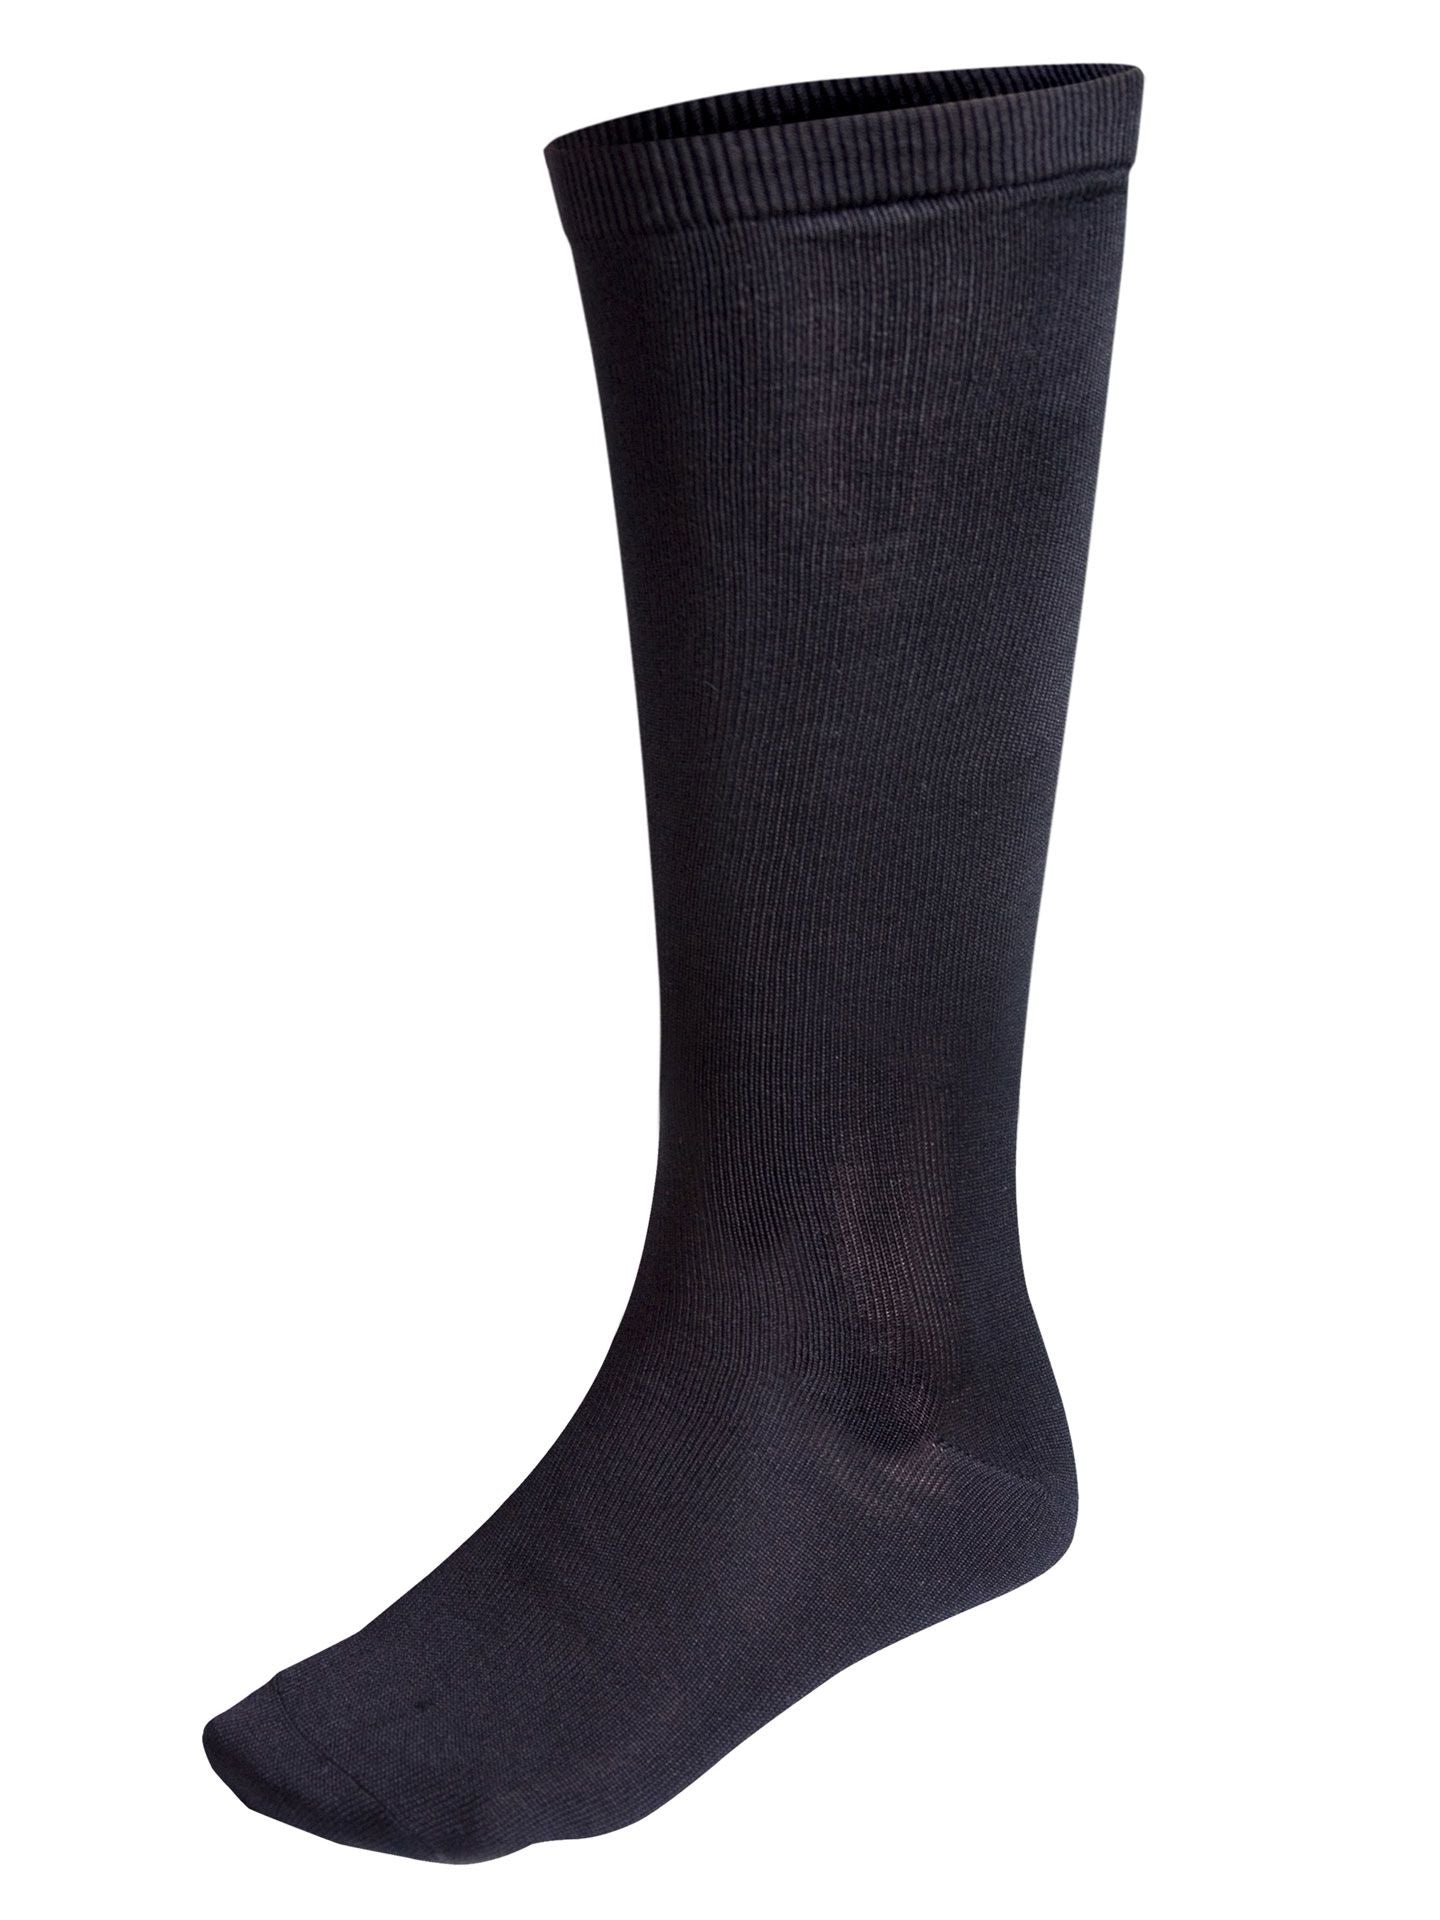 Adult Silk/Nylon Over the Calf Sock Liner